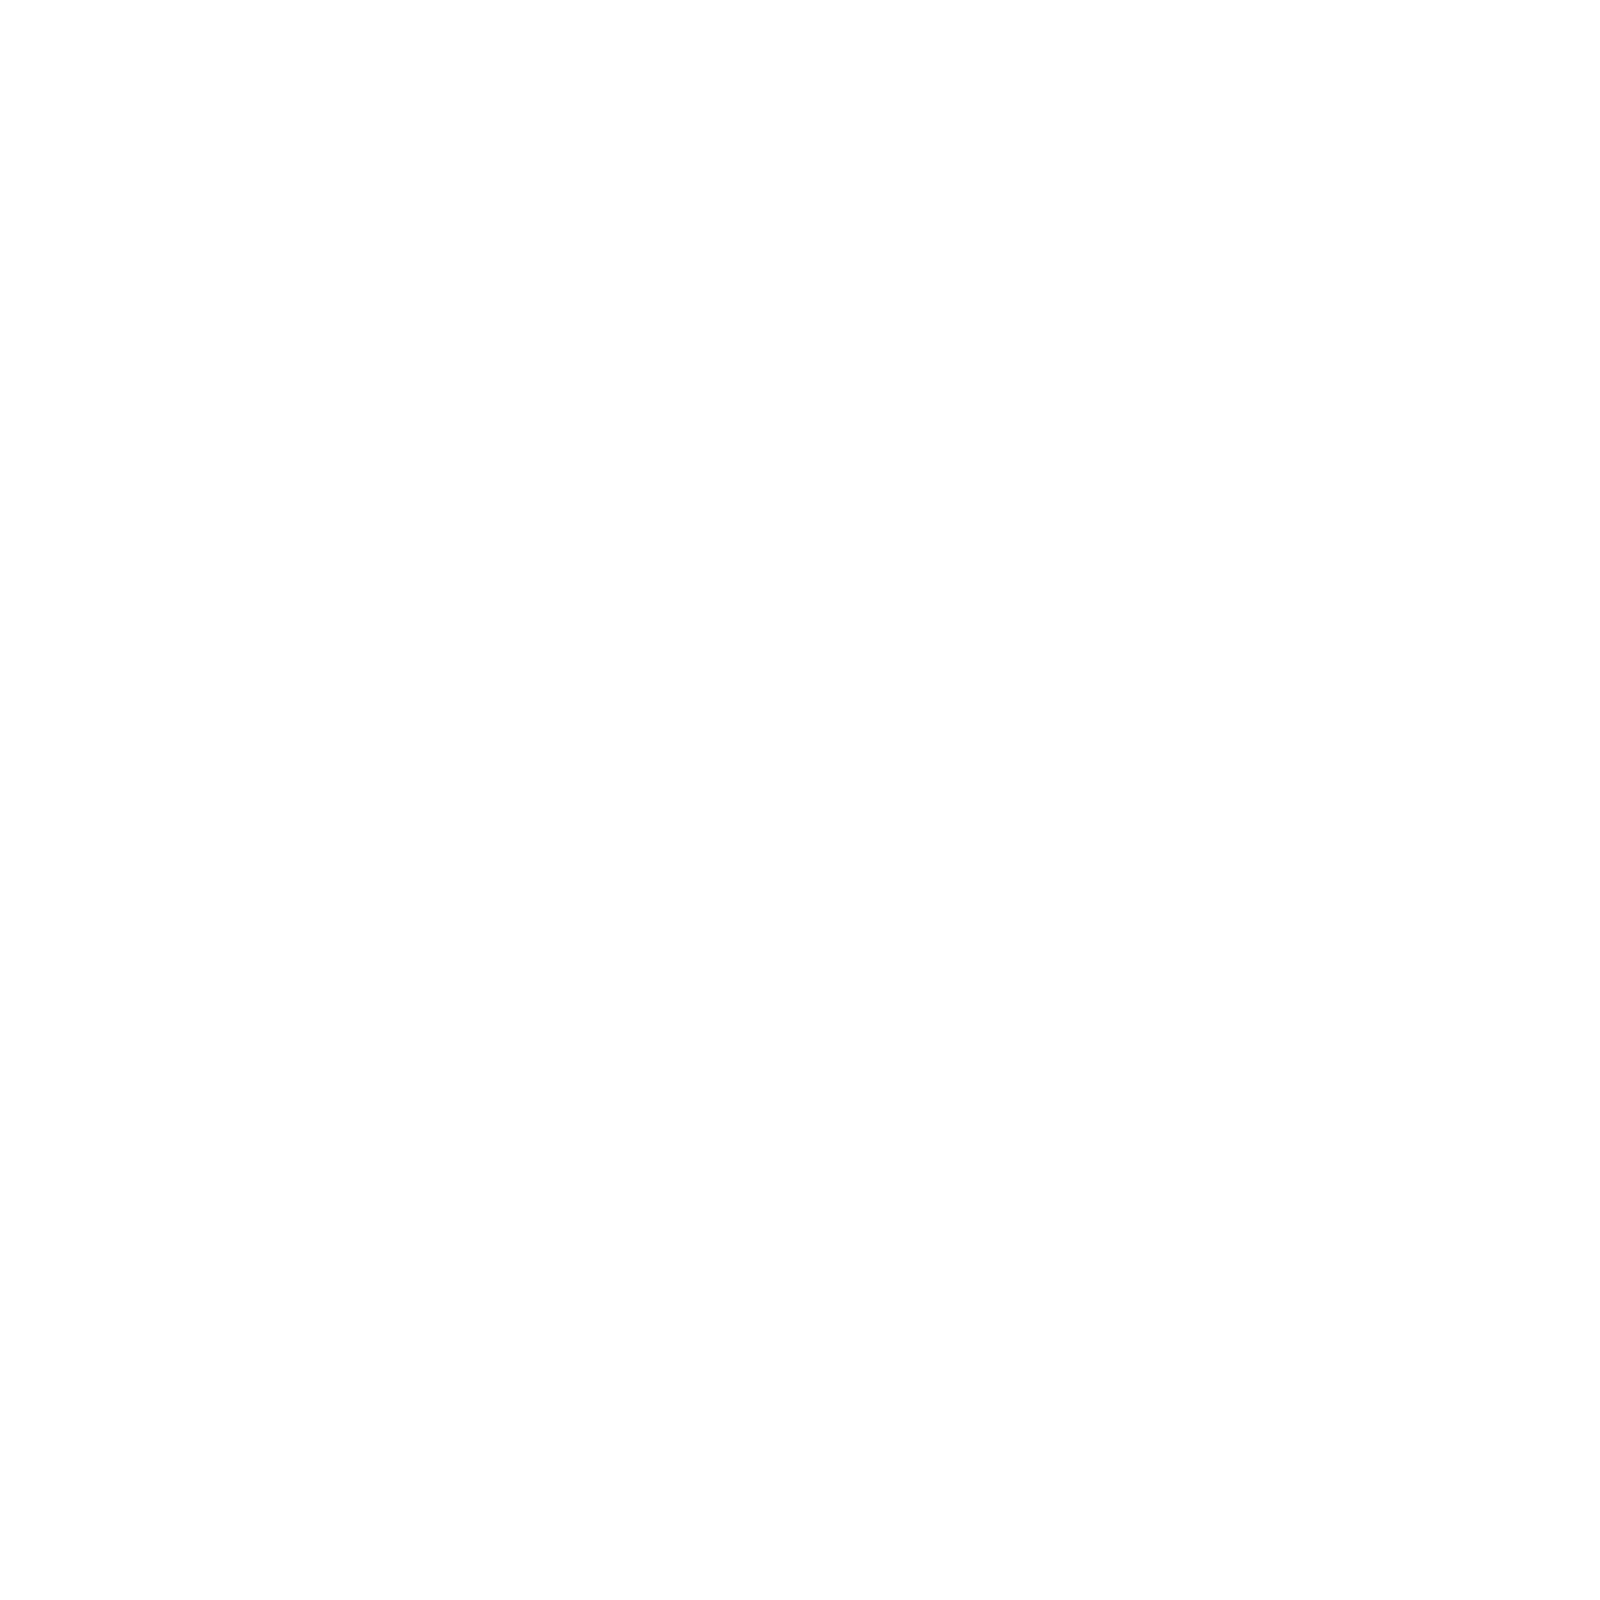 TravelTyme Pilgrimages